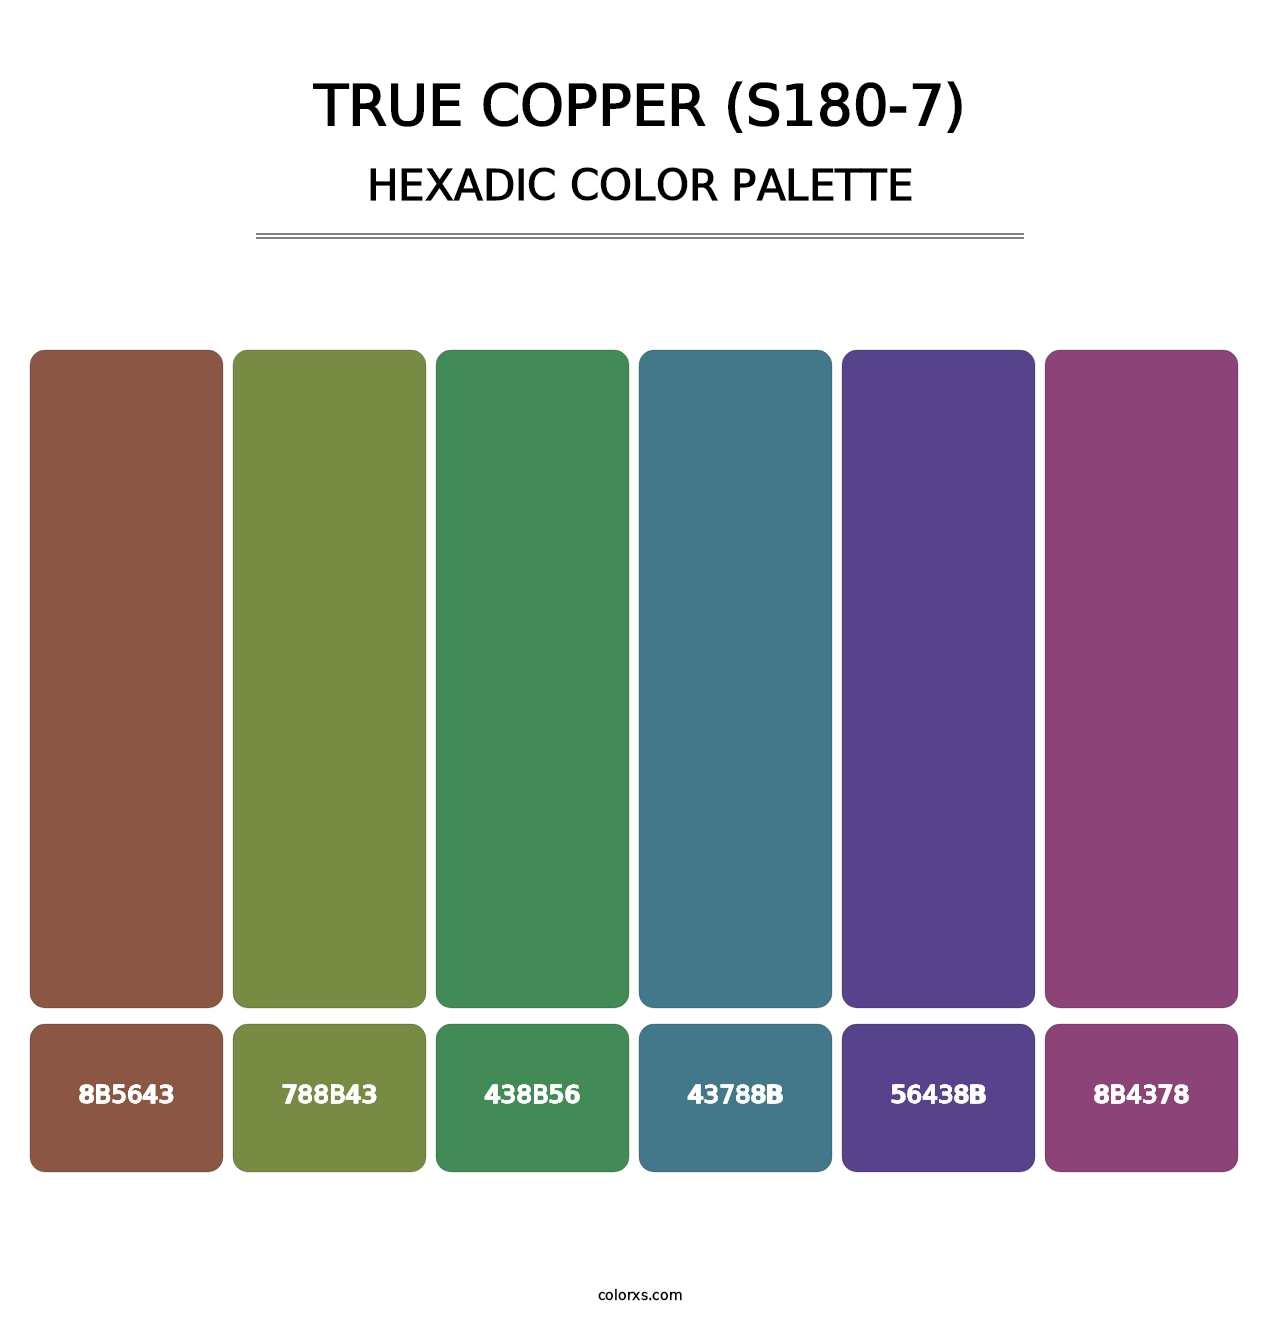 True Copper (S180-7) - Hexadic Color Palette